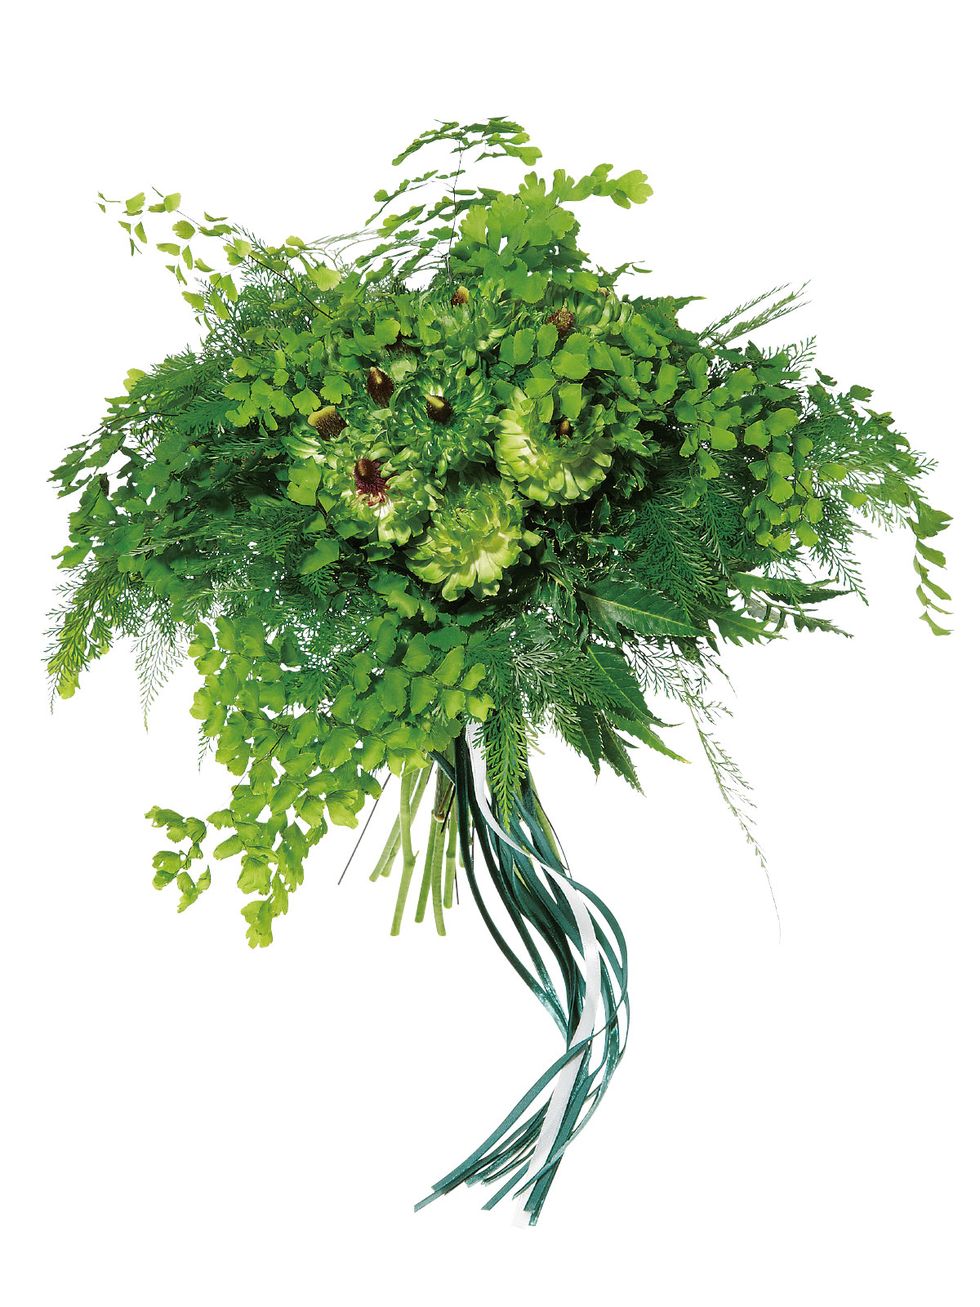 Green, Leaf, Botany, Herb, Illustration, Annual plant, Plant stem, Seaweed, 